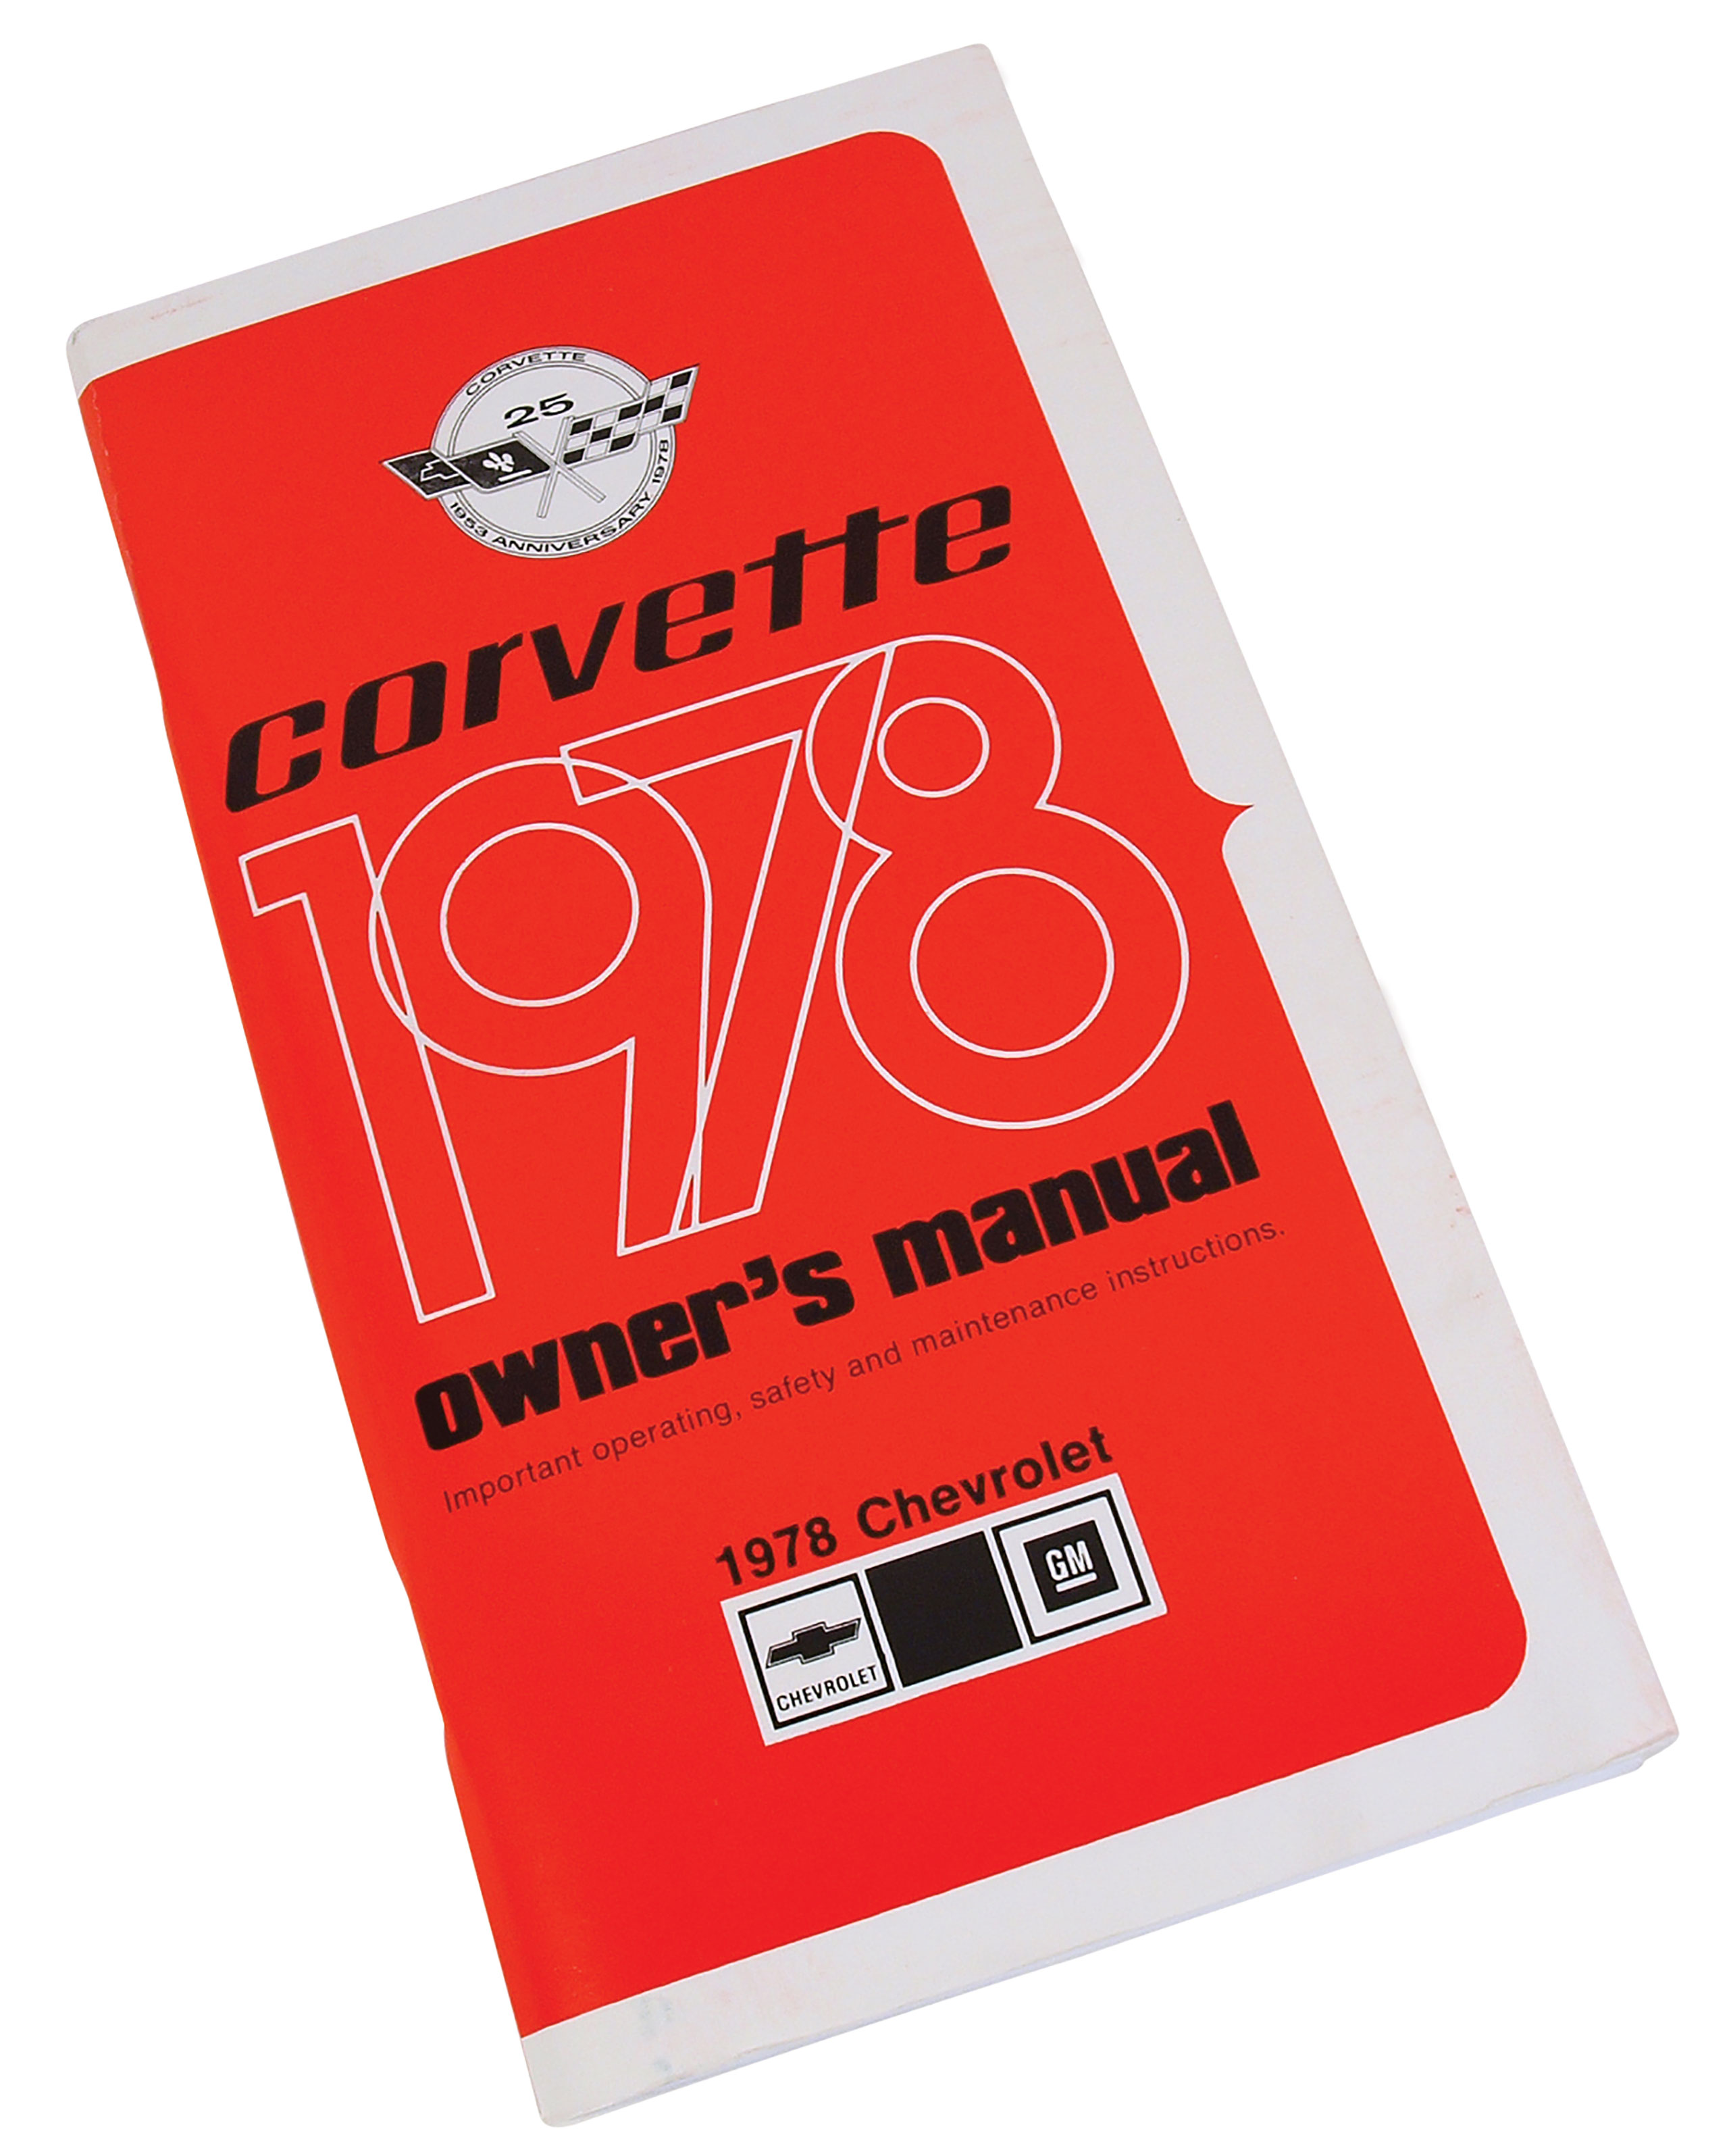 C3 1978 Chevrolet Corvette Owners Manual. Corvette - Auto Accessories of America